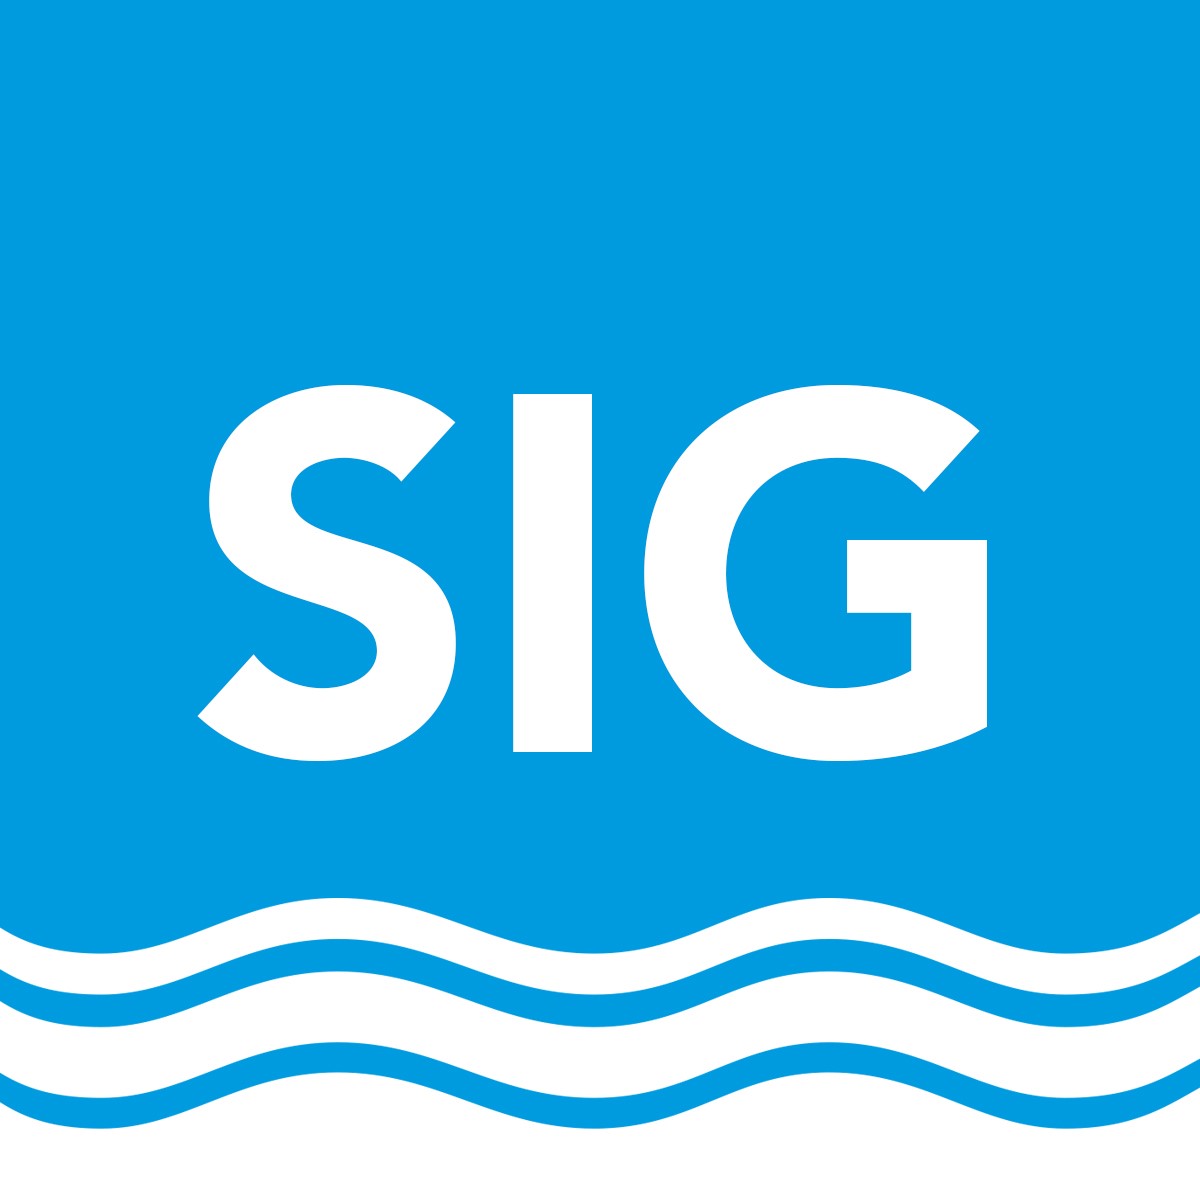 海纳亚洲创投基金 SIG | Susquehanna International Group, LLP